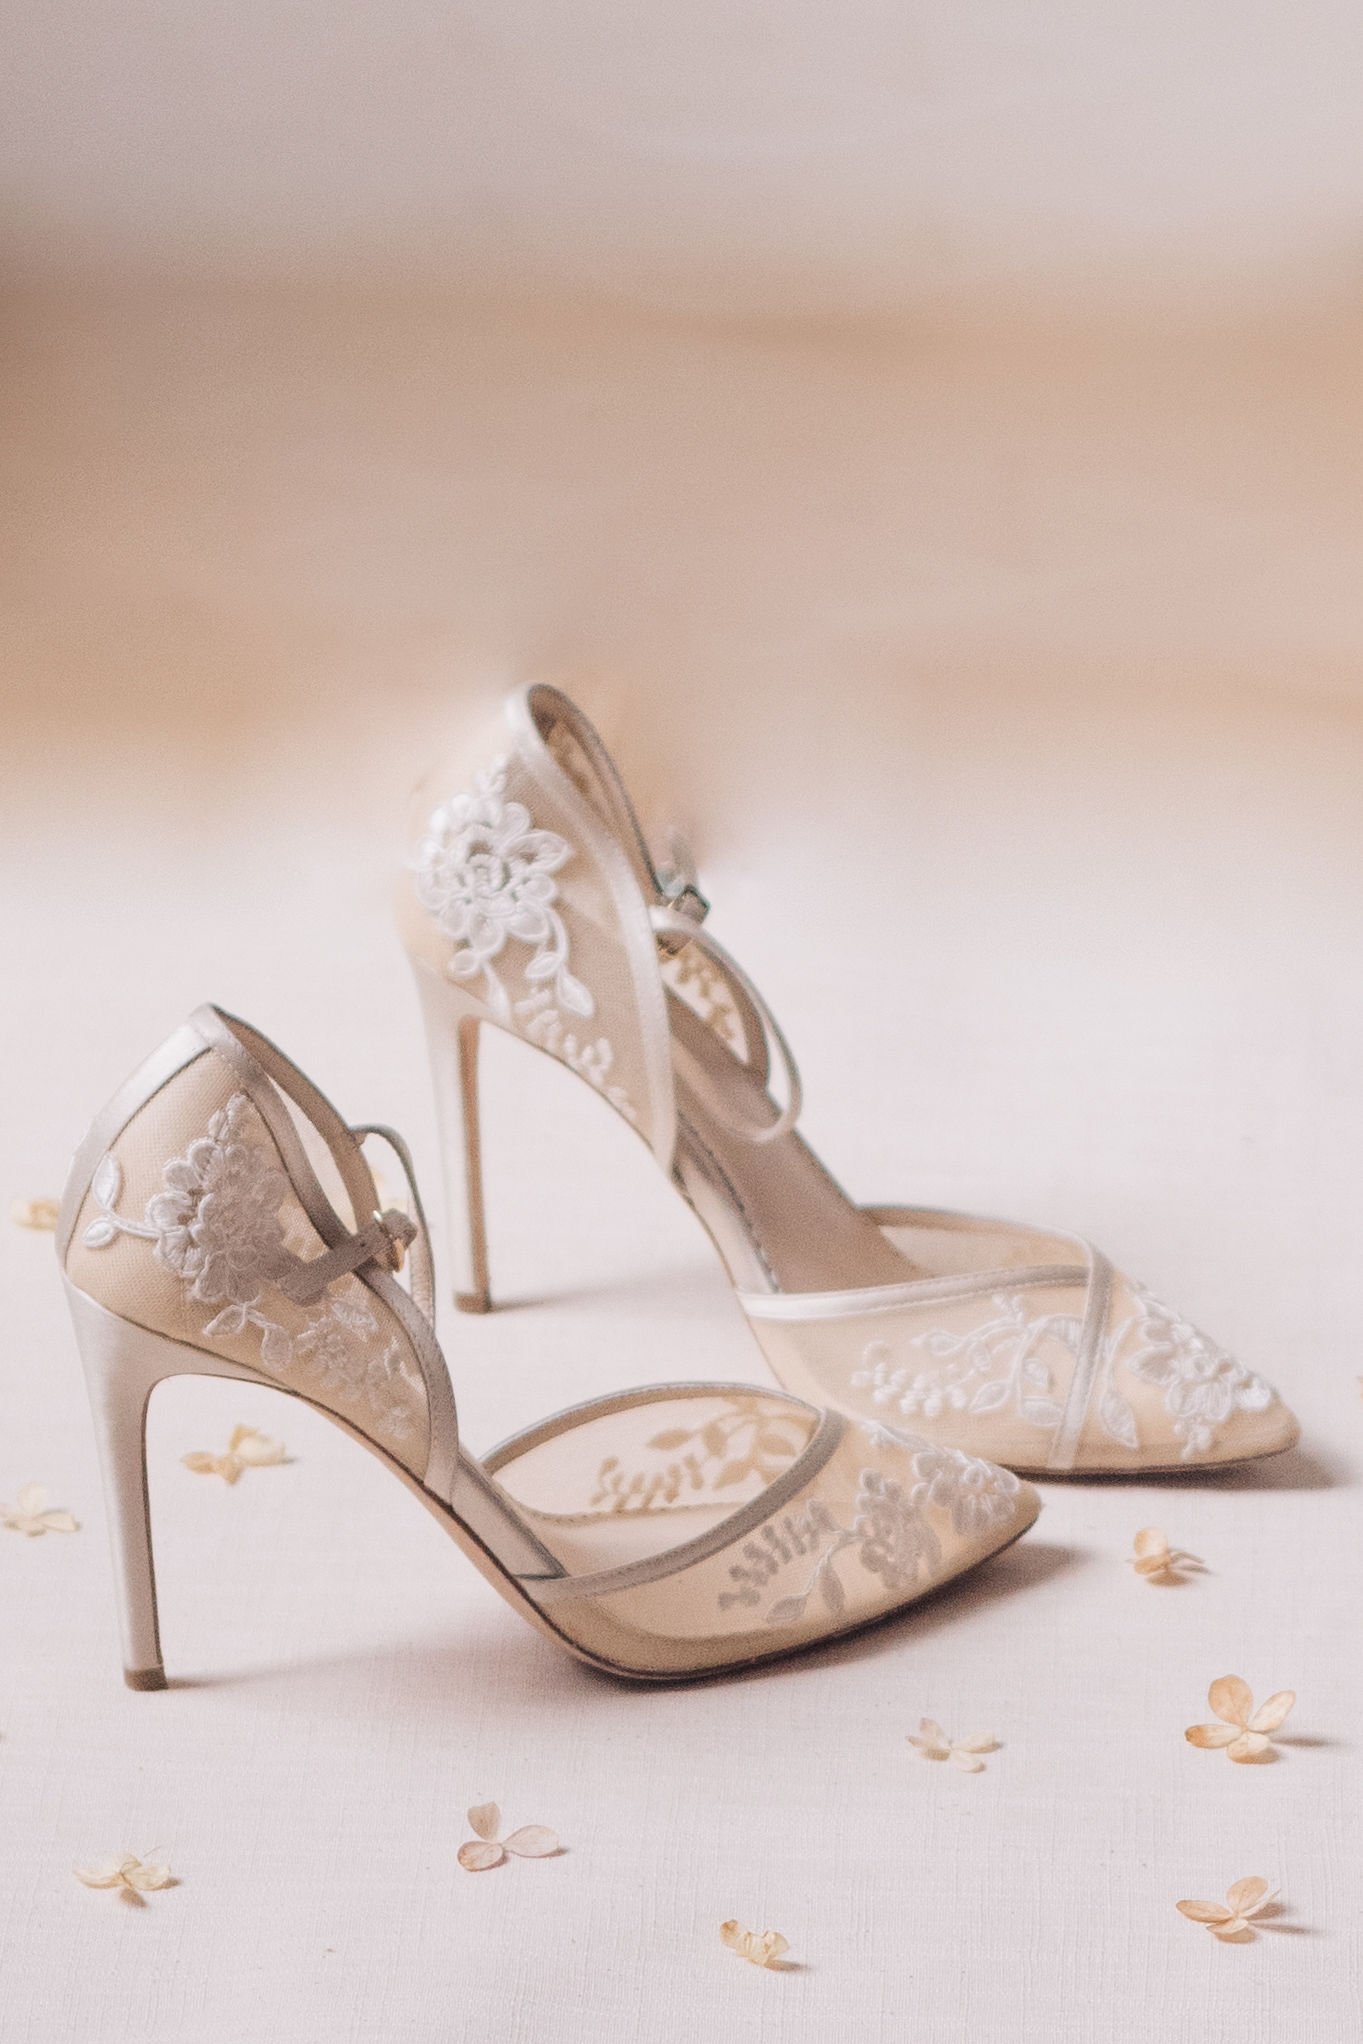 Bride's Bella Belle Wedding Shoes for her Toronto Wedding day!